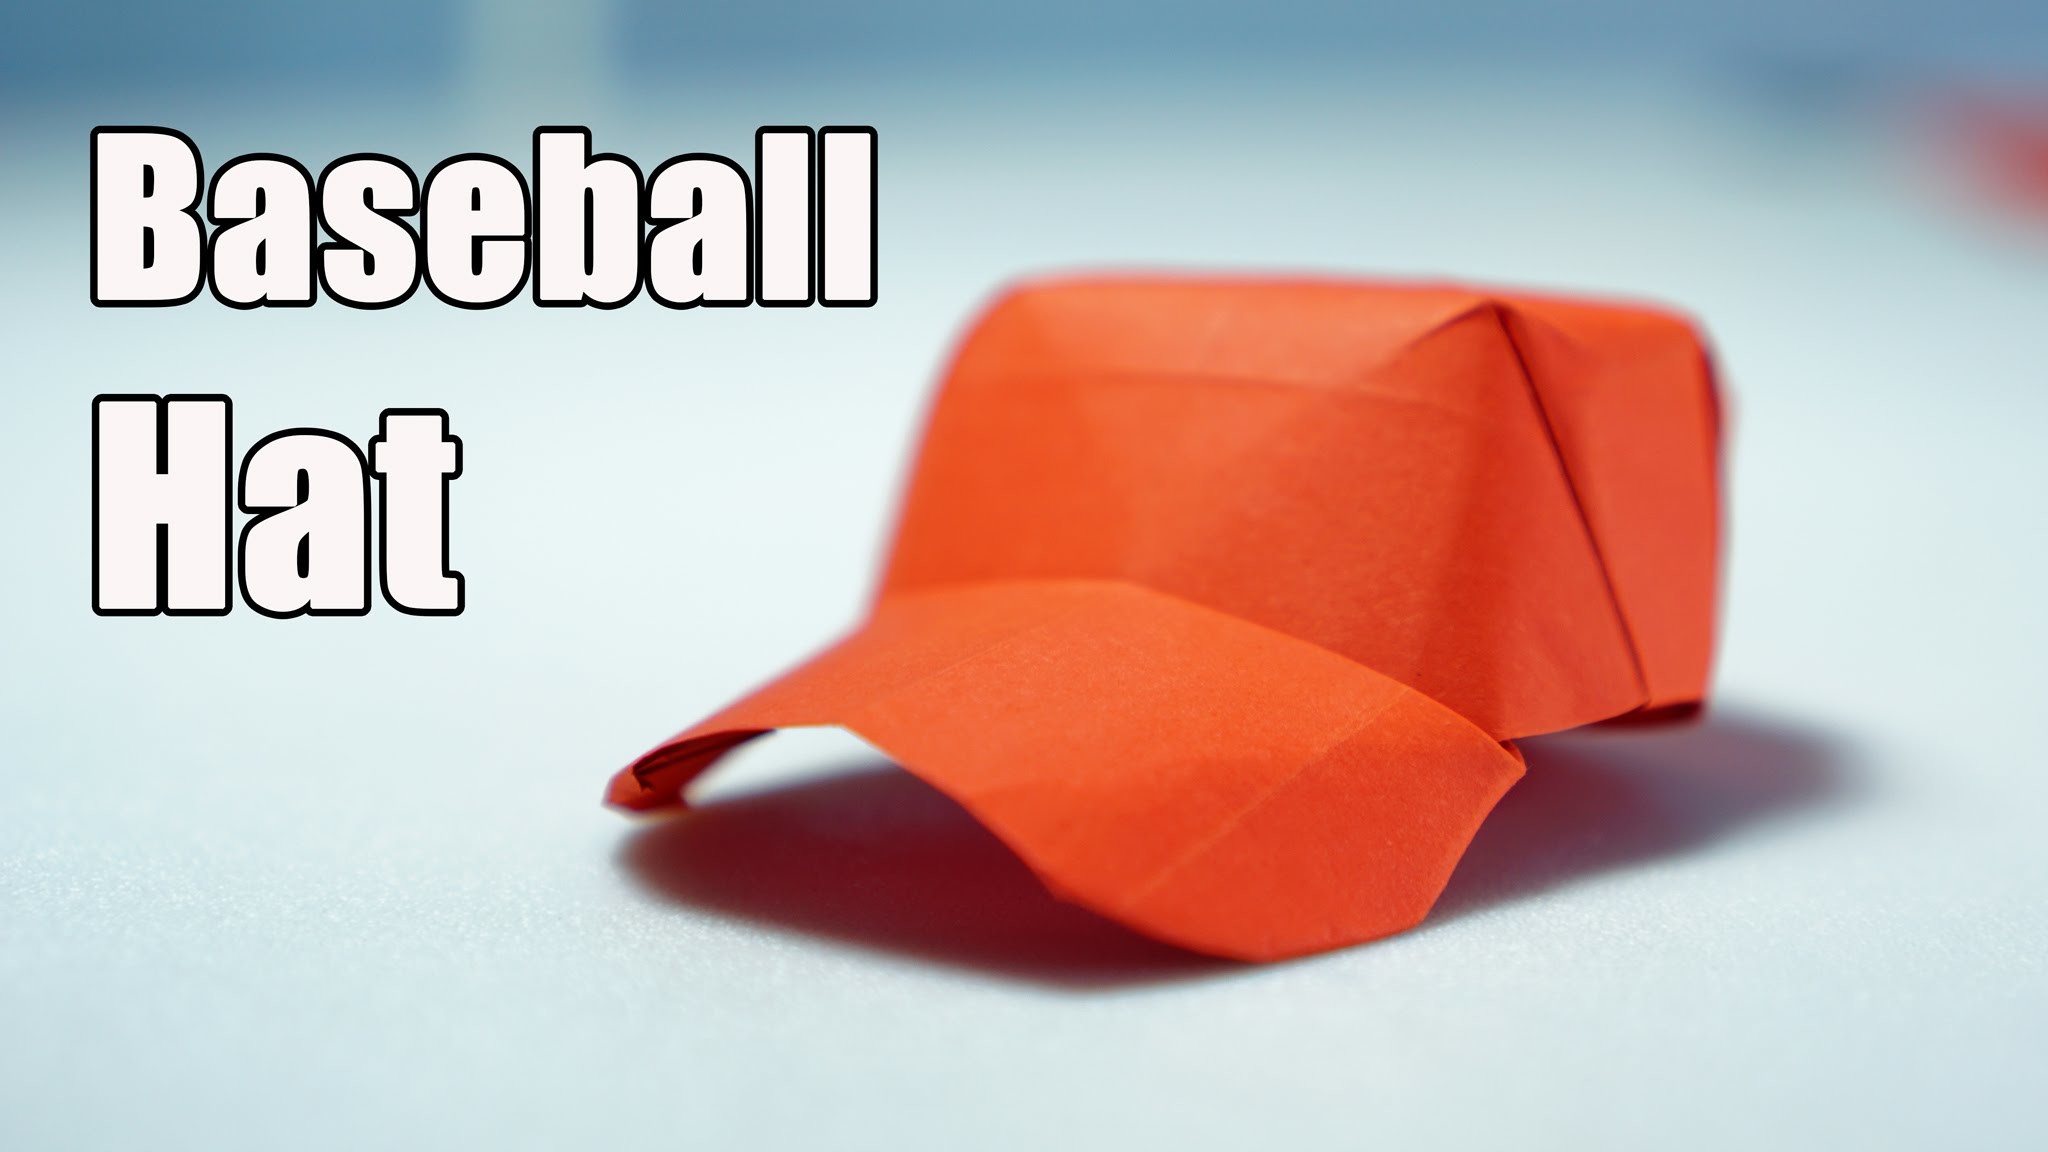 origami-baseball-hat-tutorial-diy-henry-ph-m